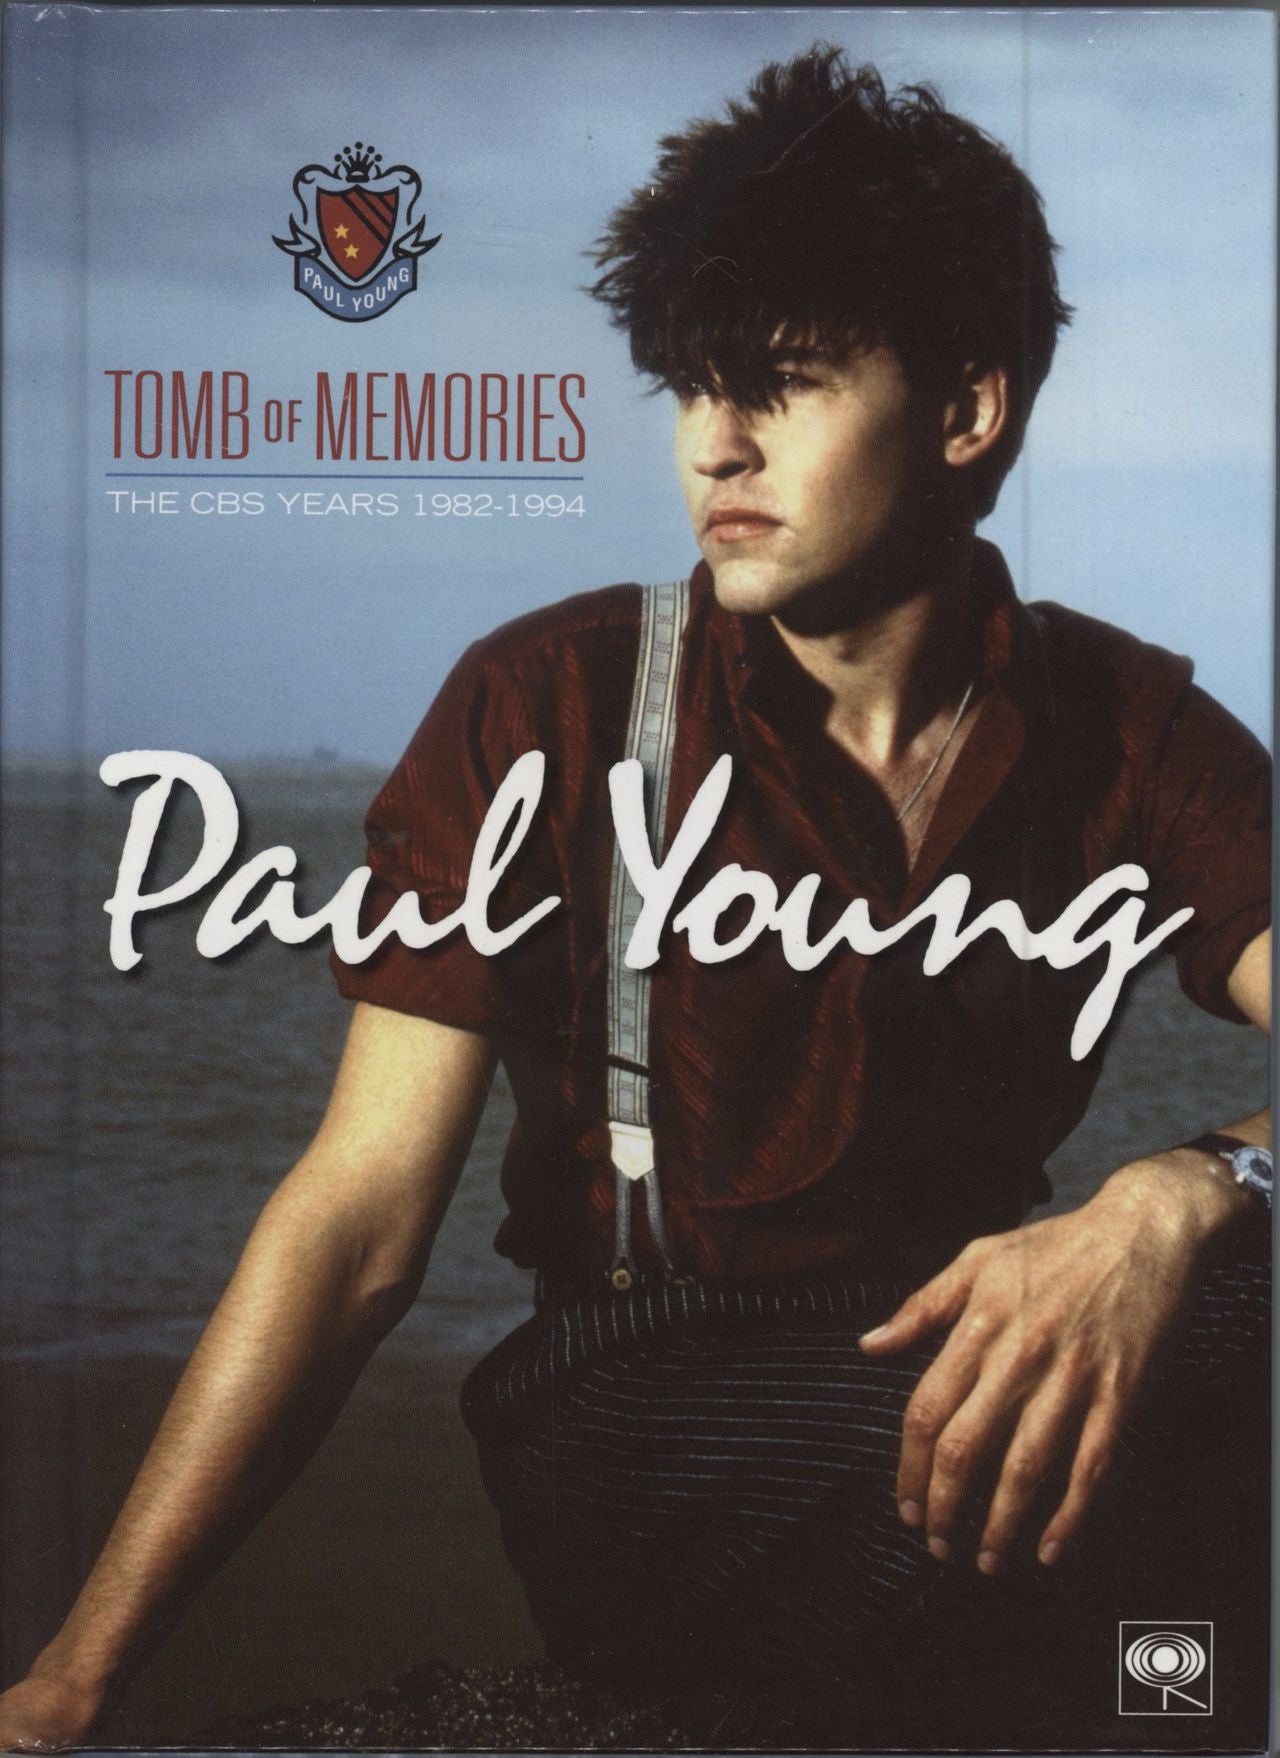 Paul Young Tomb Of Memories: The CBS Years 1982-1994 UK 4-CD album set 88875106602